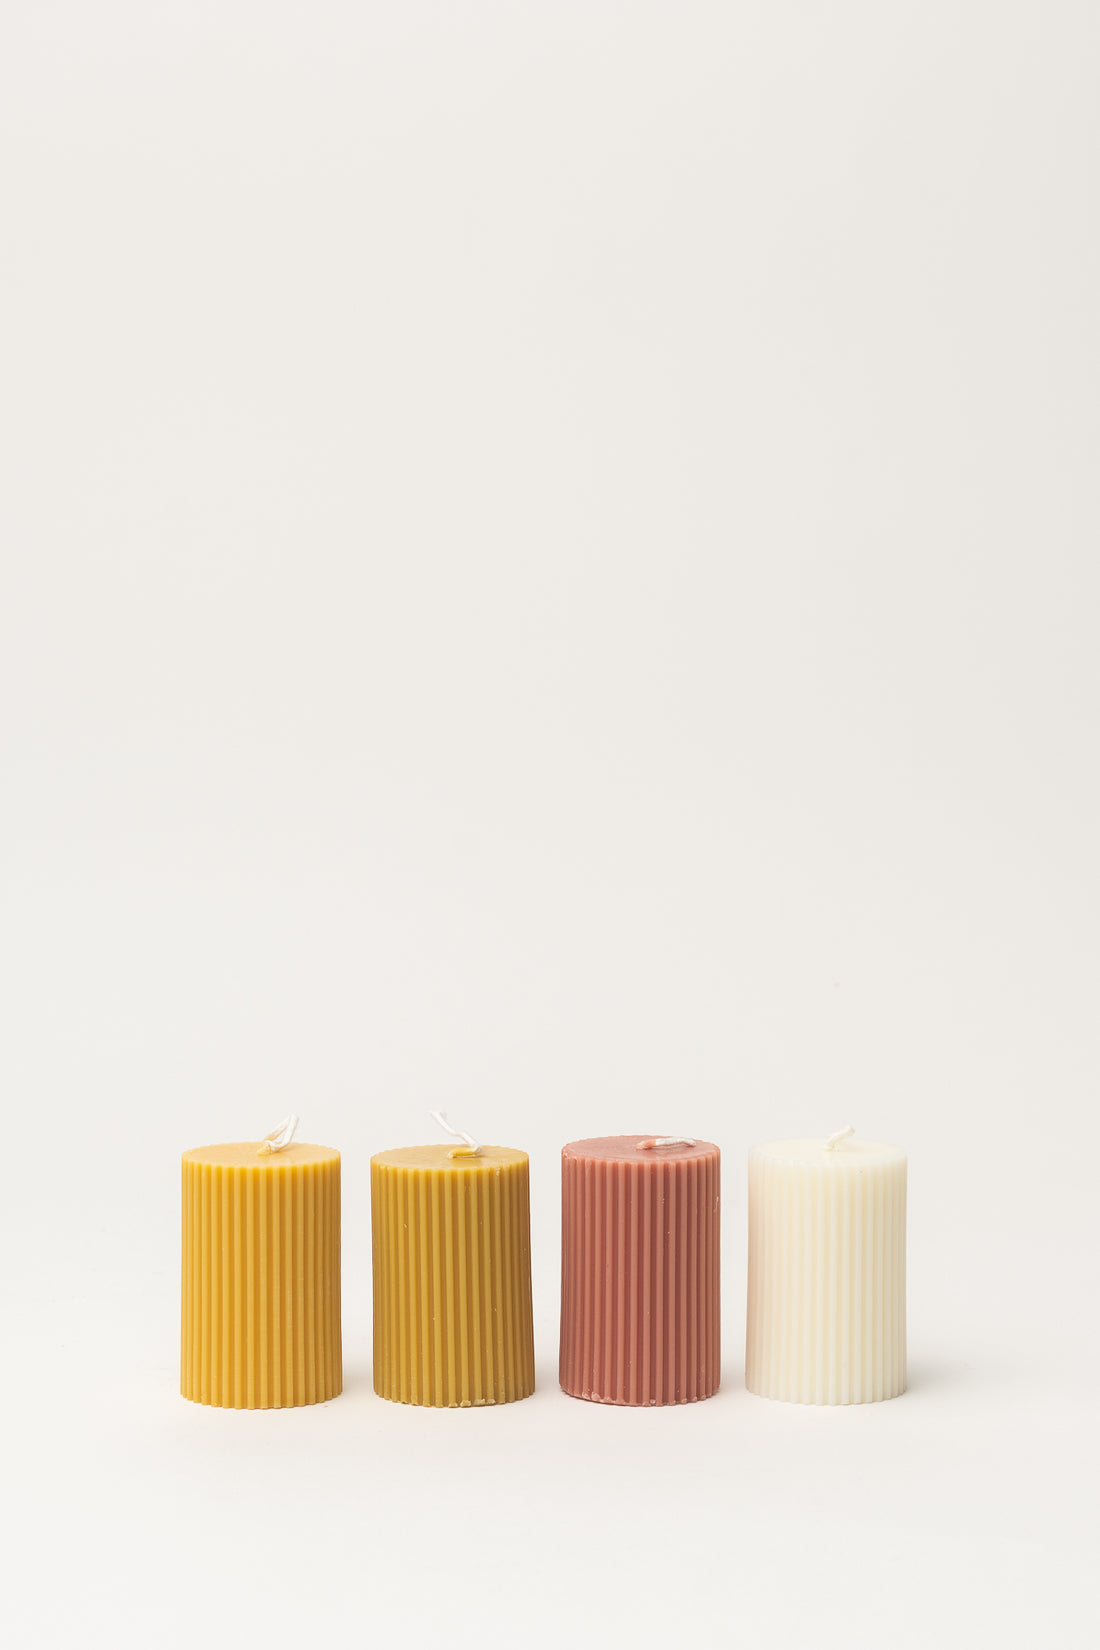 Pillar Candle - Wax Yellow